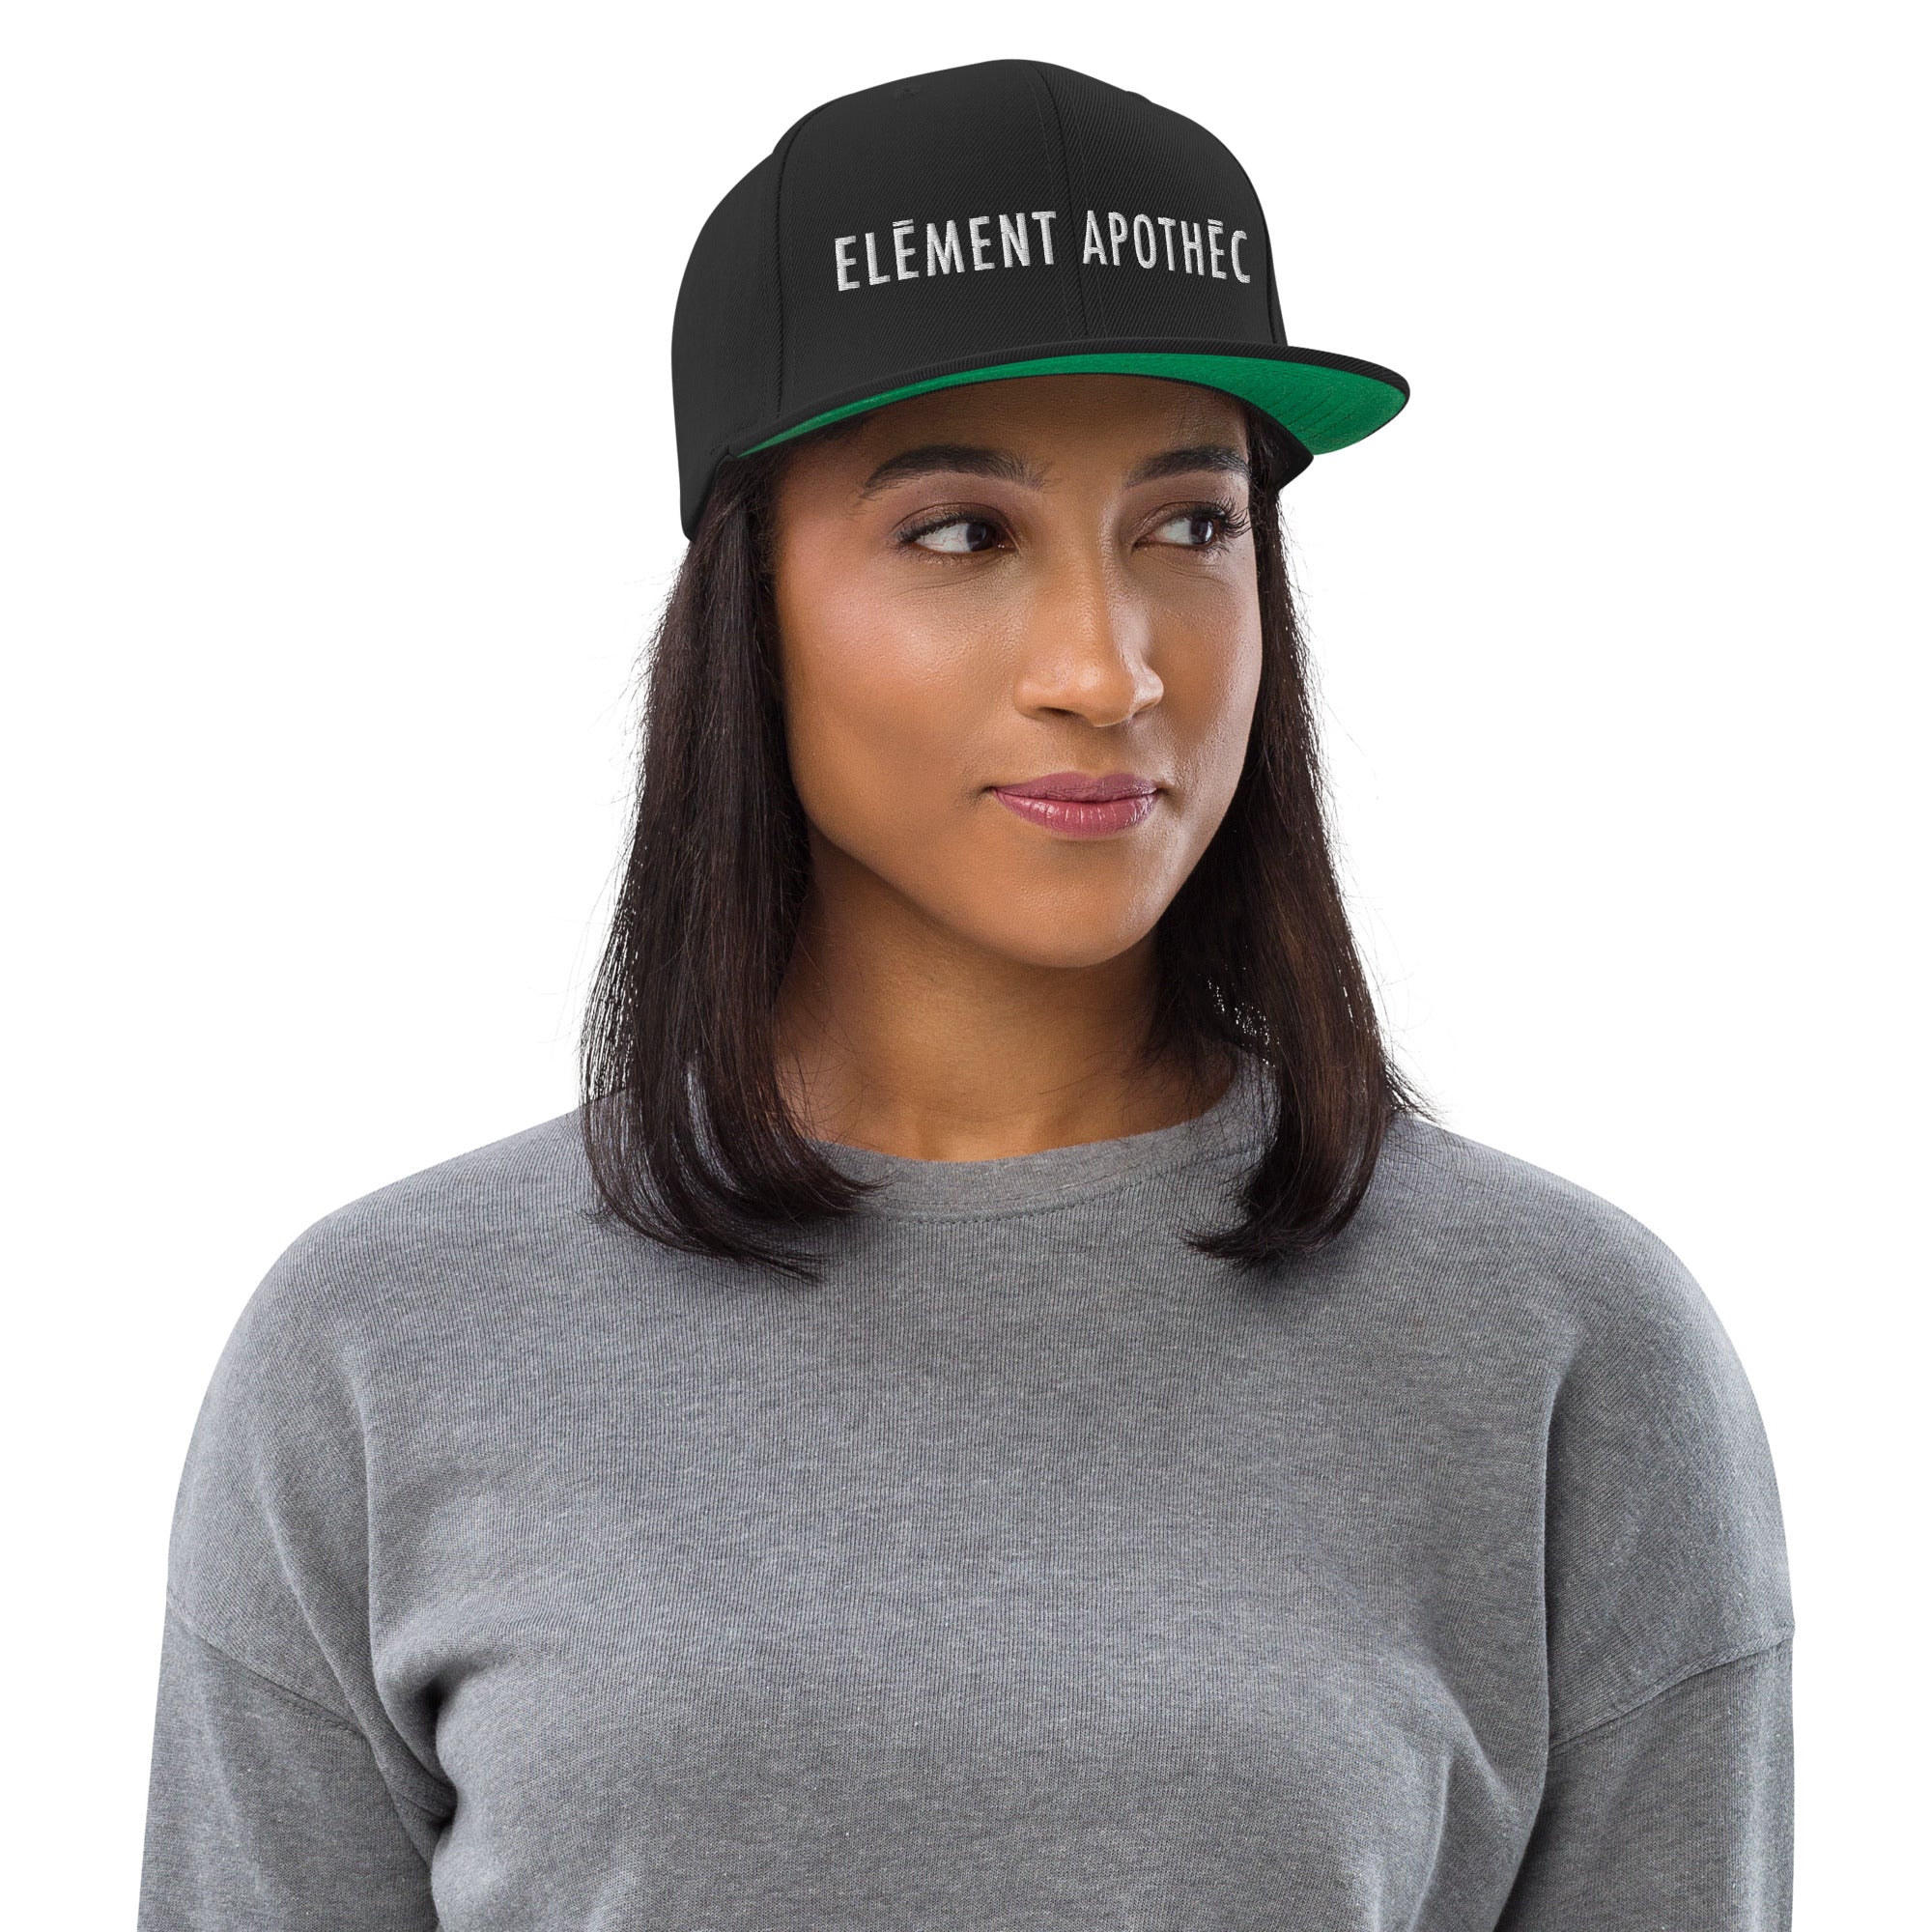 Element Apothec | Snapback Hat